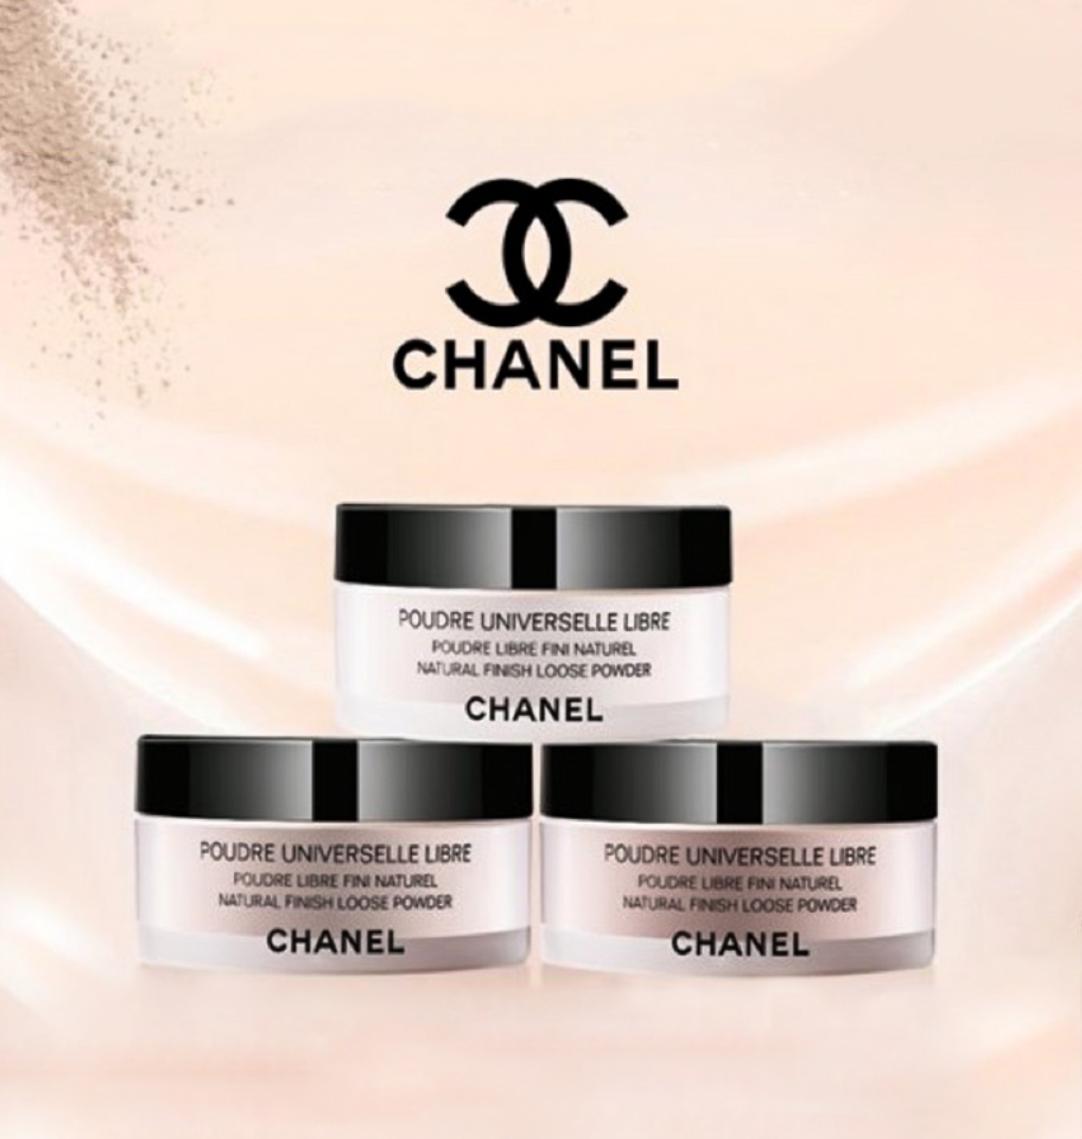 LOOSE POWDER WEEK! Chanel Natural Finish Loose Powder 